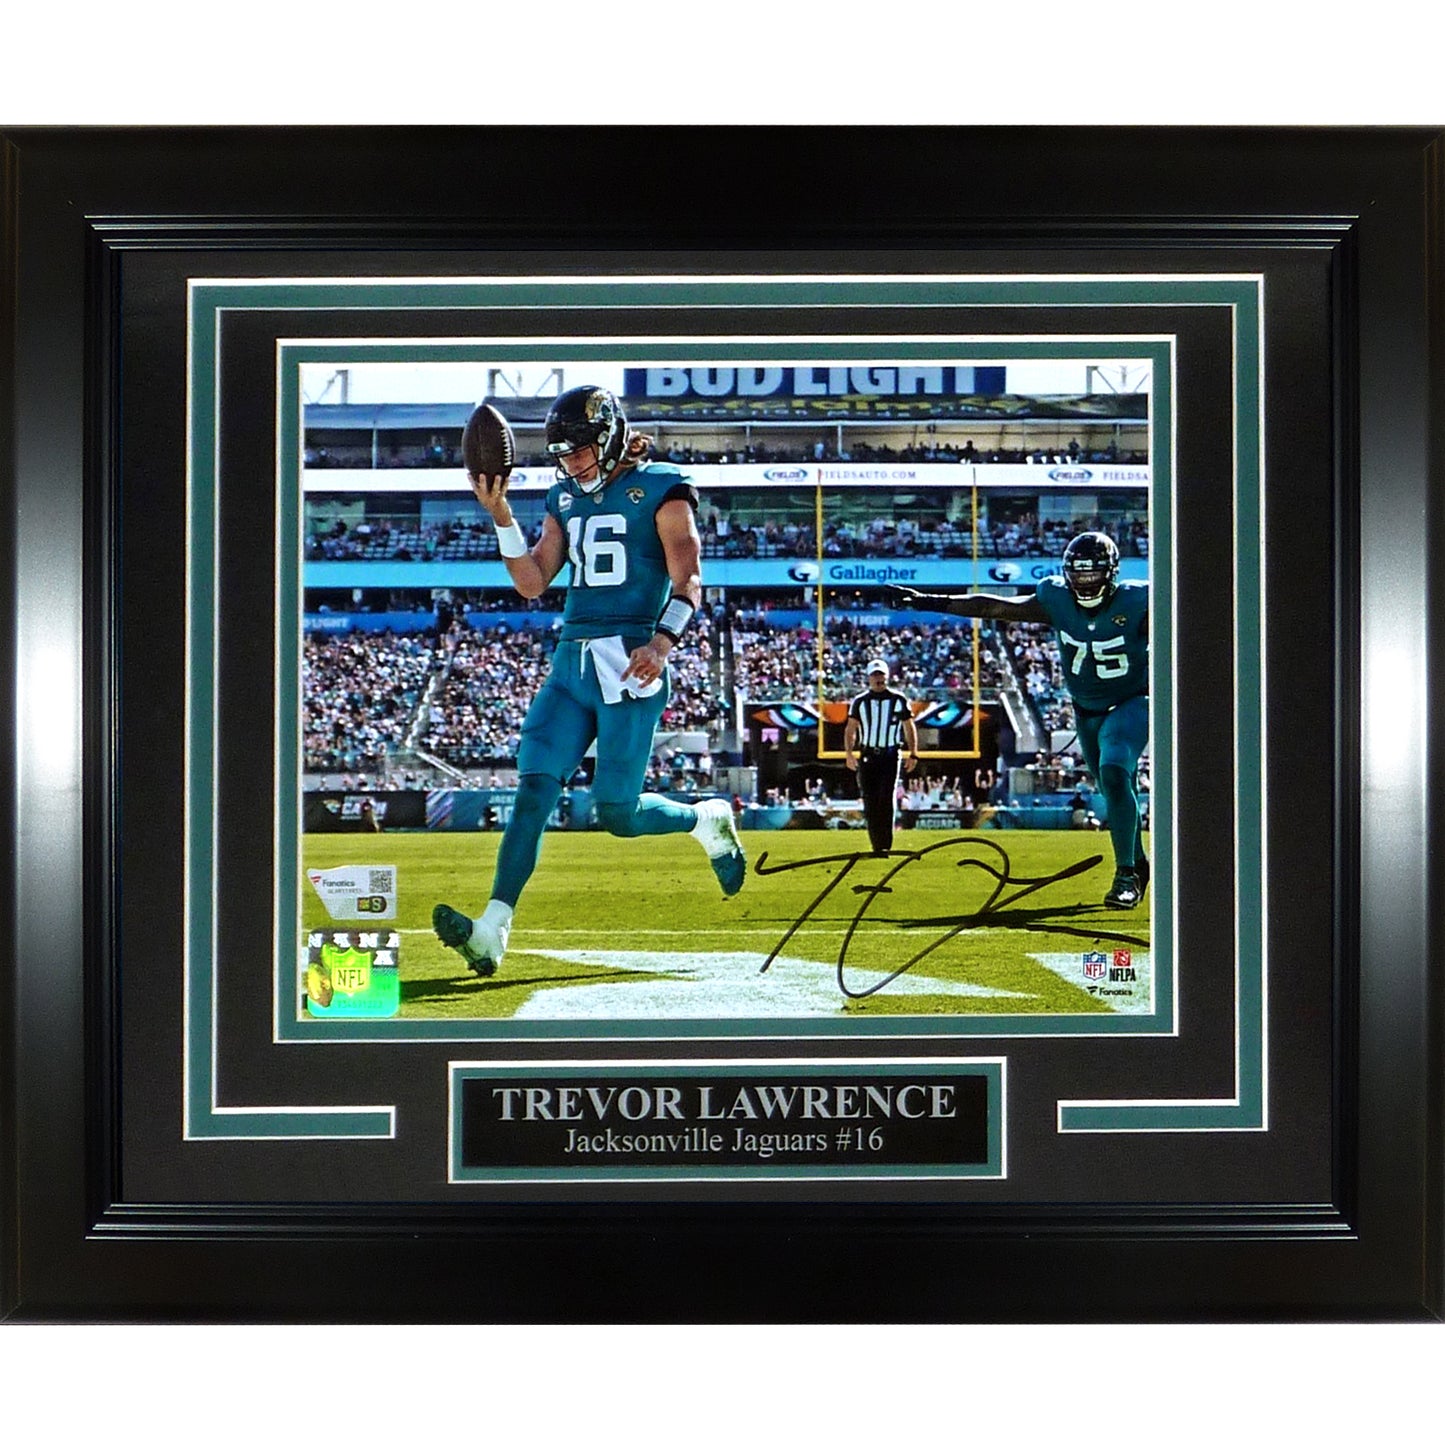 Trevor Lawrence Autographed Jacksonville Jaguars Deluxe Framed 8x10 Photo - Fanatics